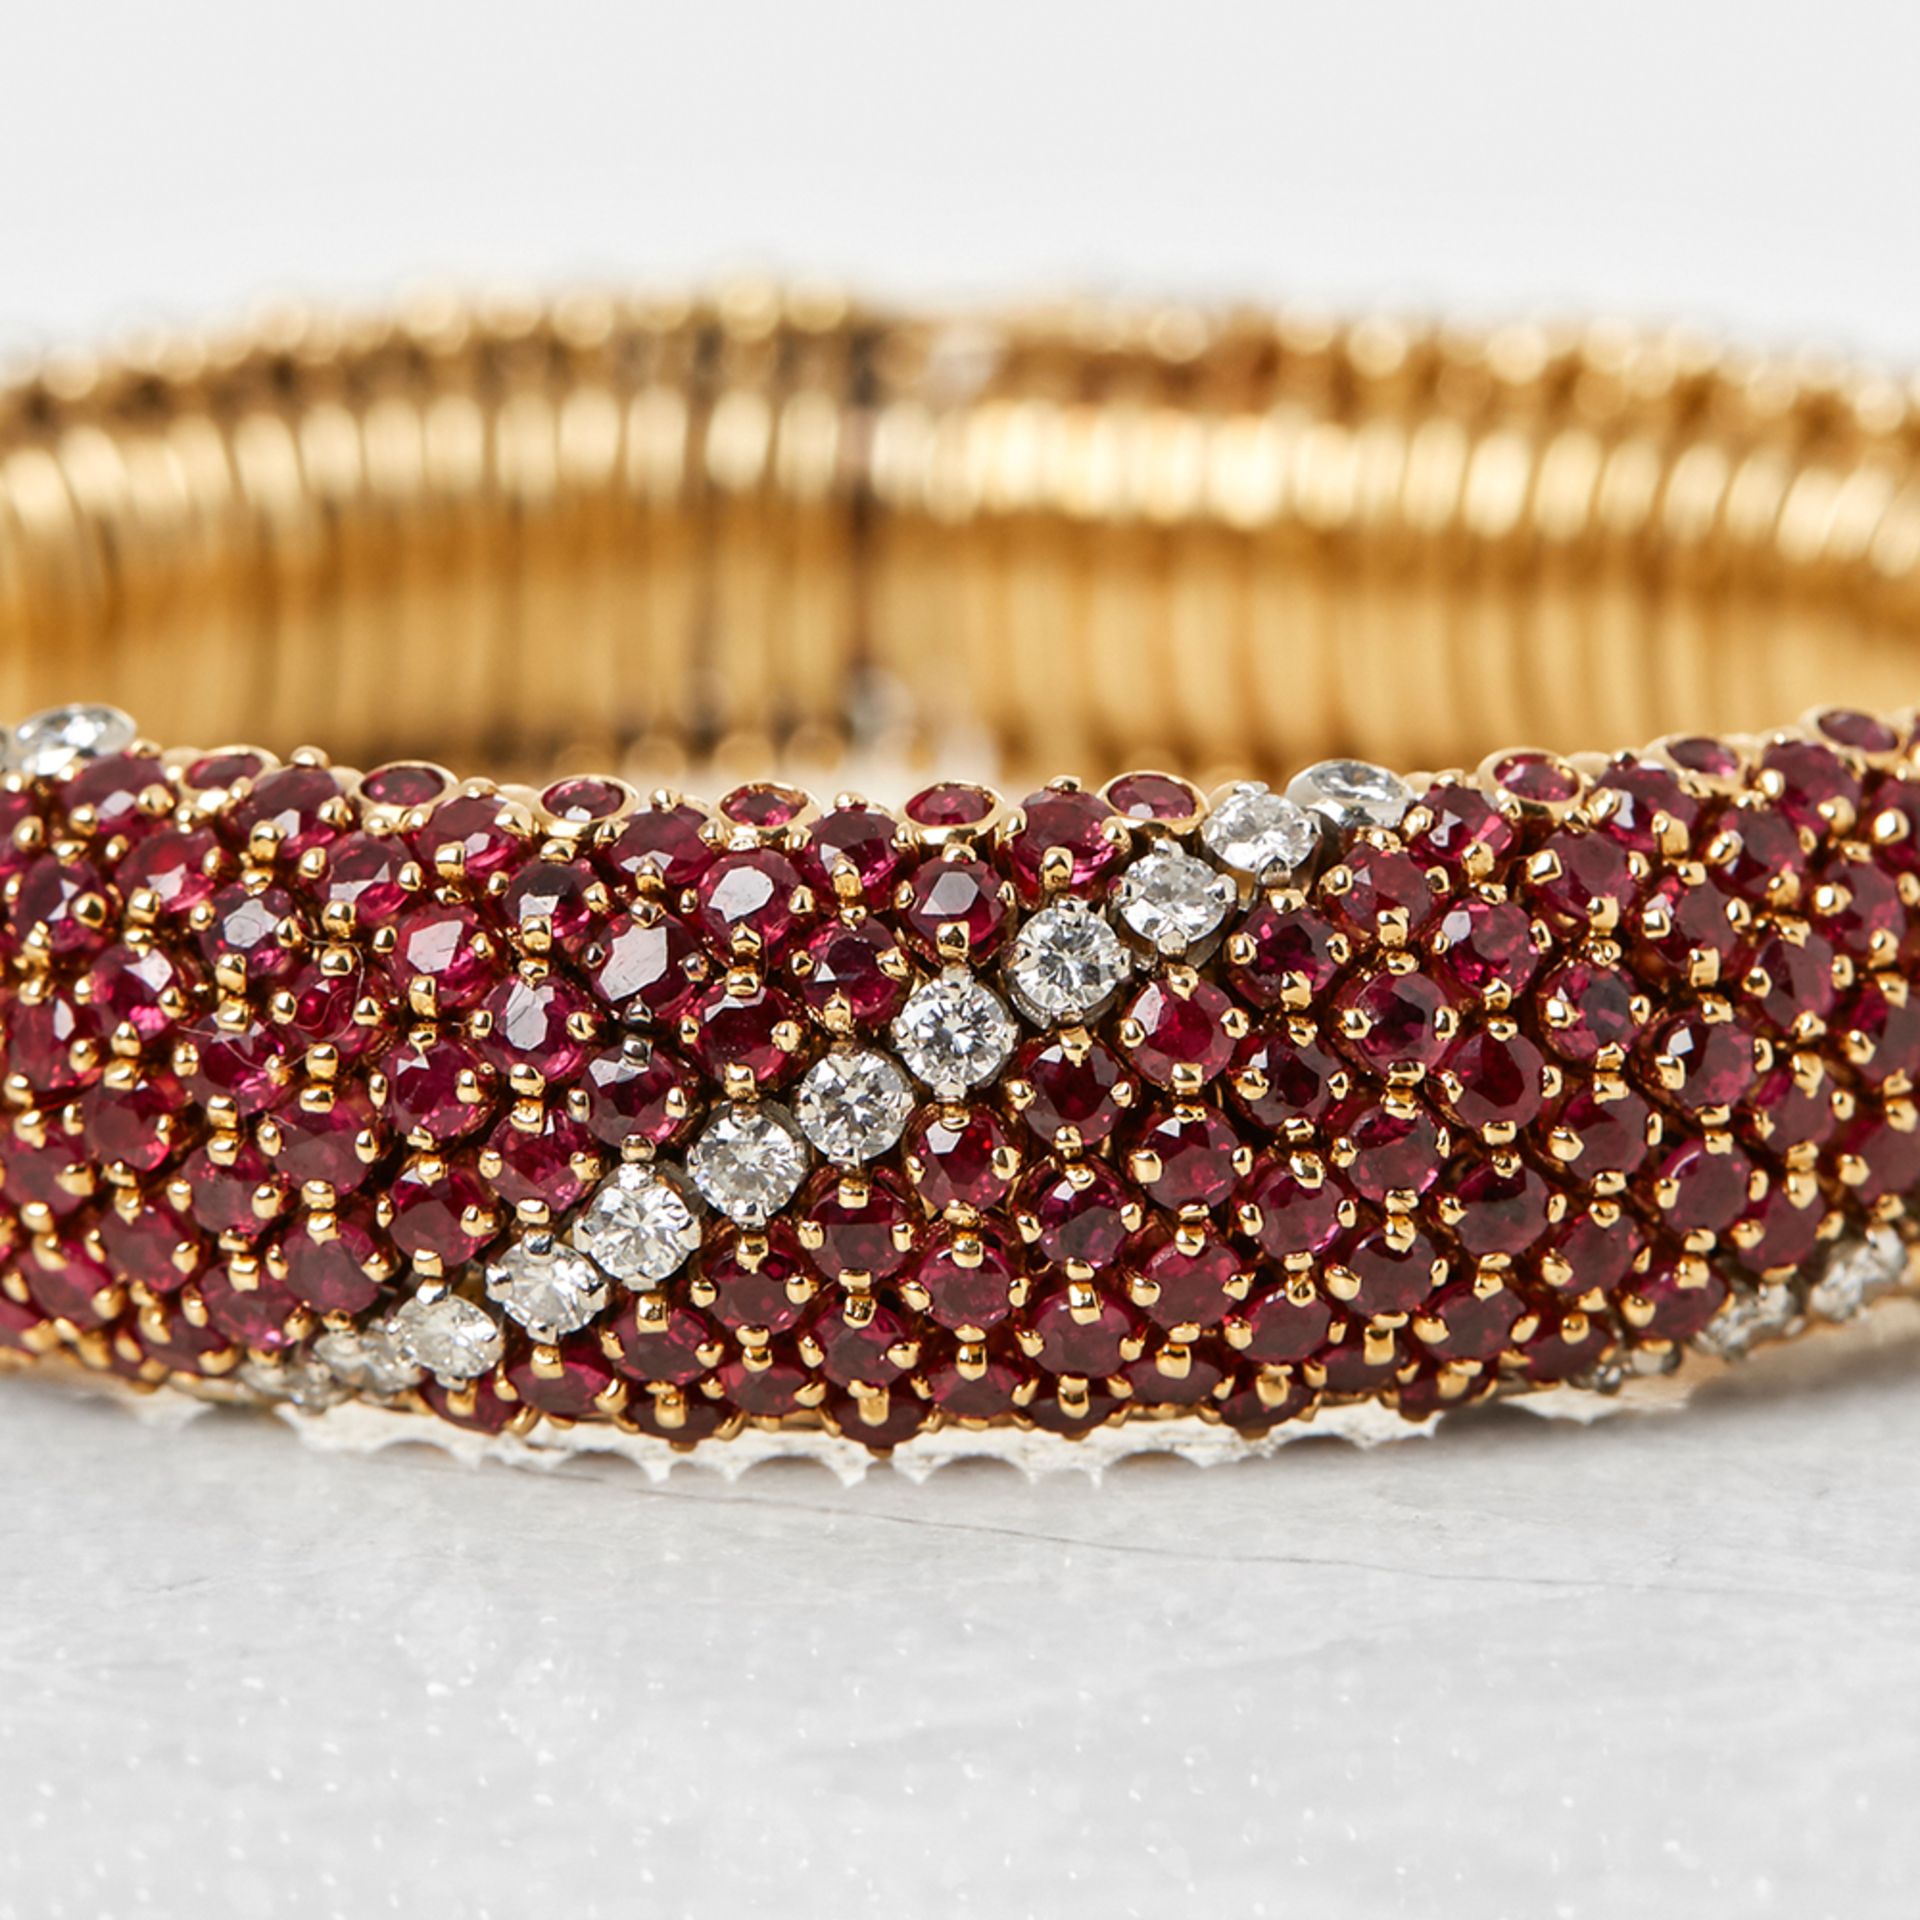 Van Cleef & Arpels 18k Yellow Gold Ruby & Diamond Vintage Statement Bracelet - Image 6 of 7